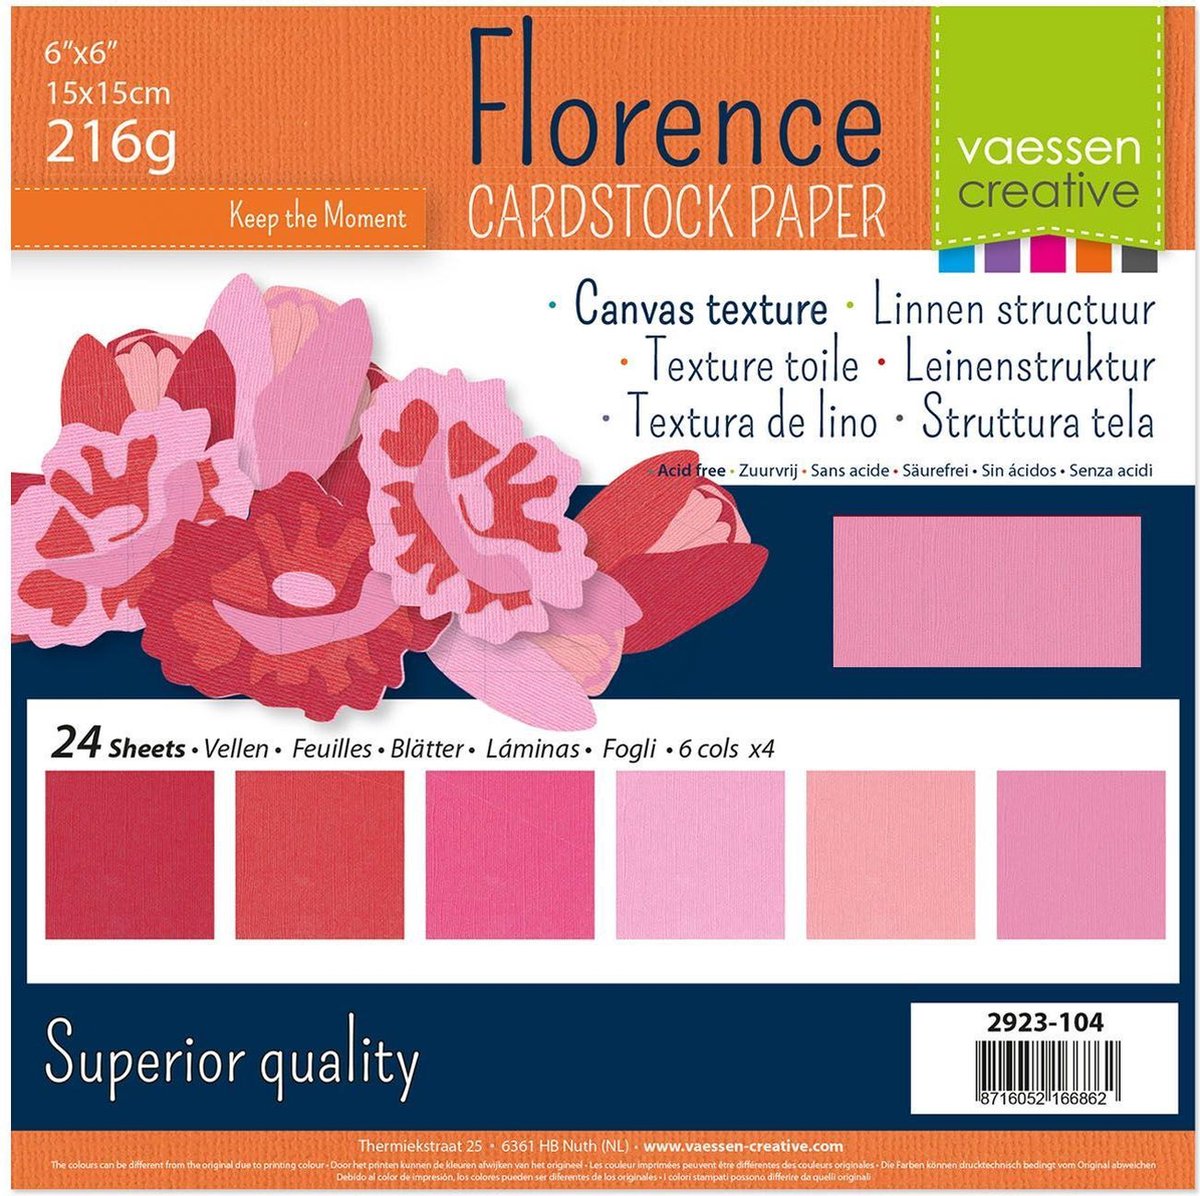 Vaessen Creative Florence Cardstock, Stevig Kaartpapier 216g - Roze,24 Stuks. 15 x 15 cm